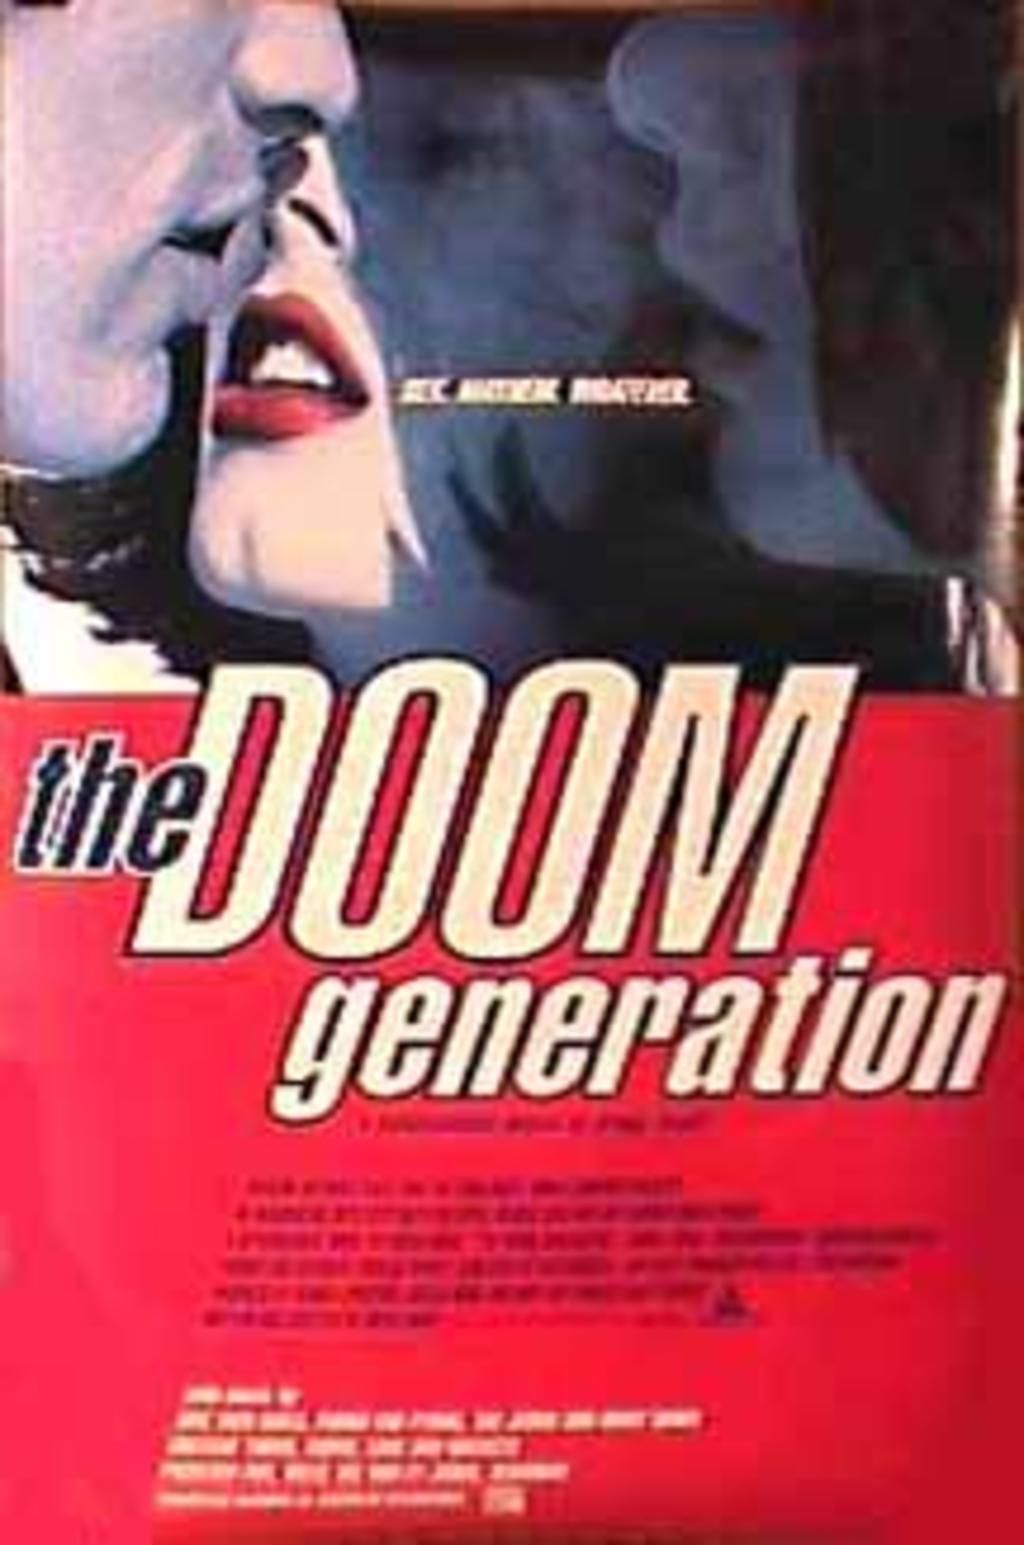 Watch The Doom Generation on Netflix Today! | NetflixMovies.com